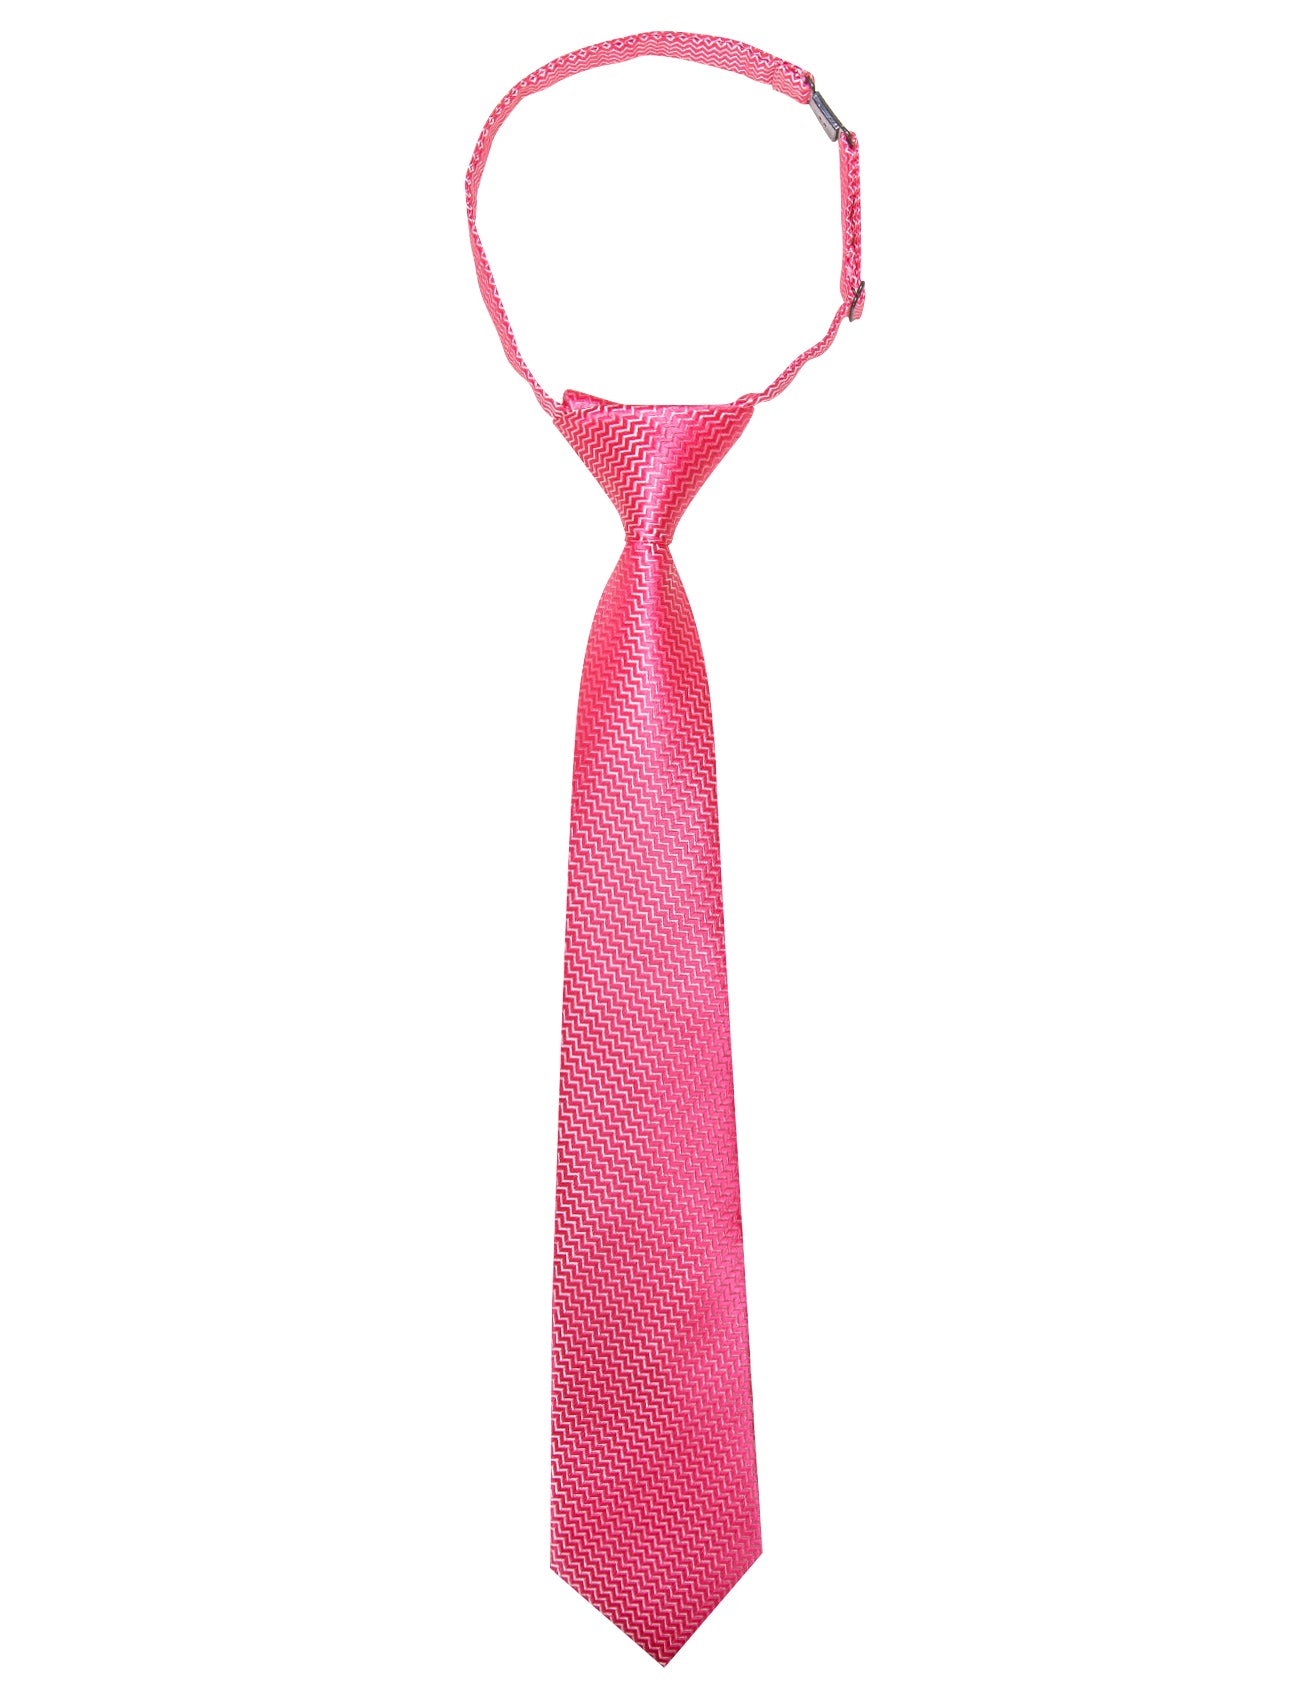 Barry.wang Kids Tie Ruby Pink Geometric Silk Children's Tie Hanky Set